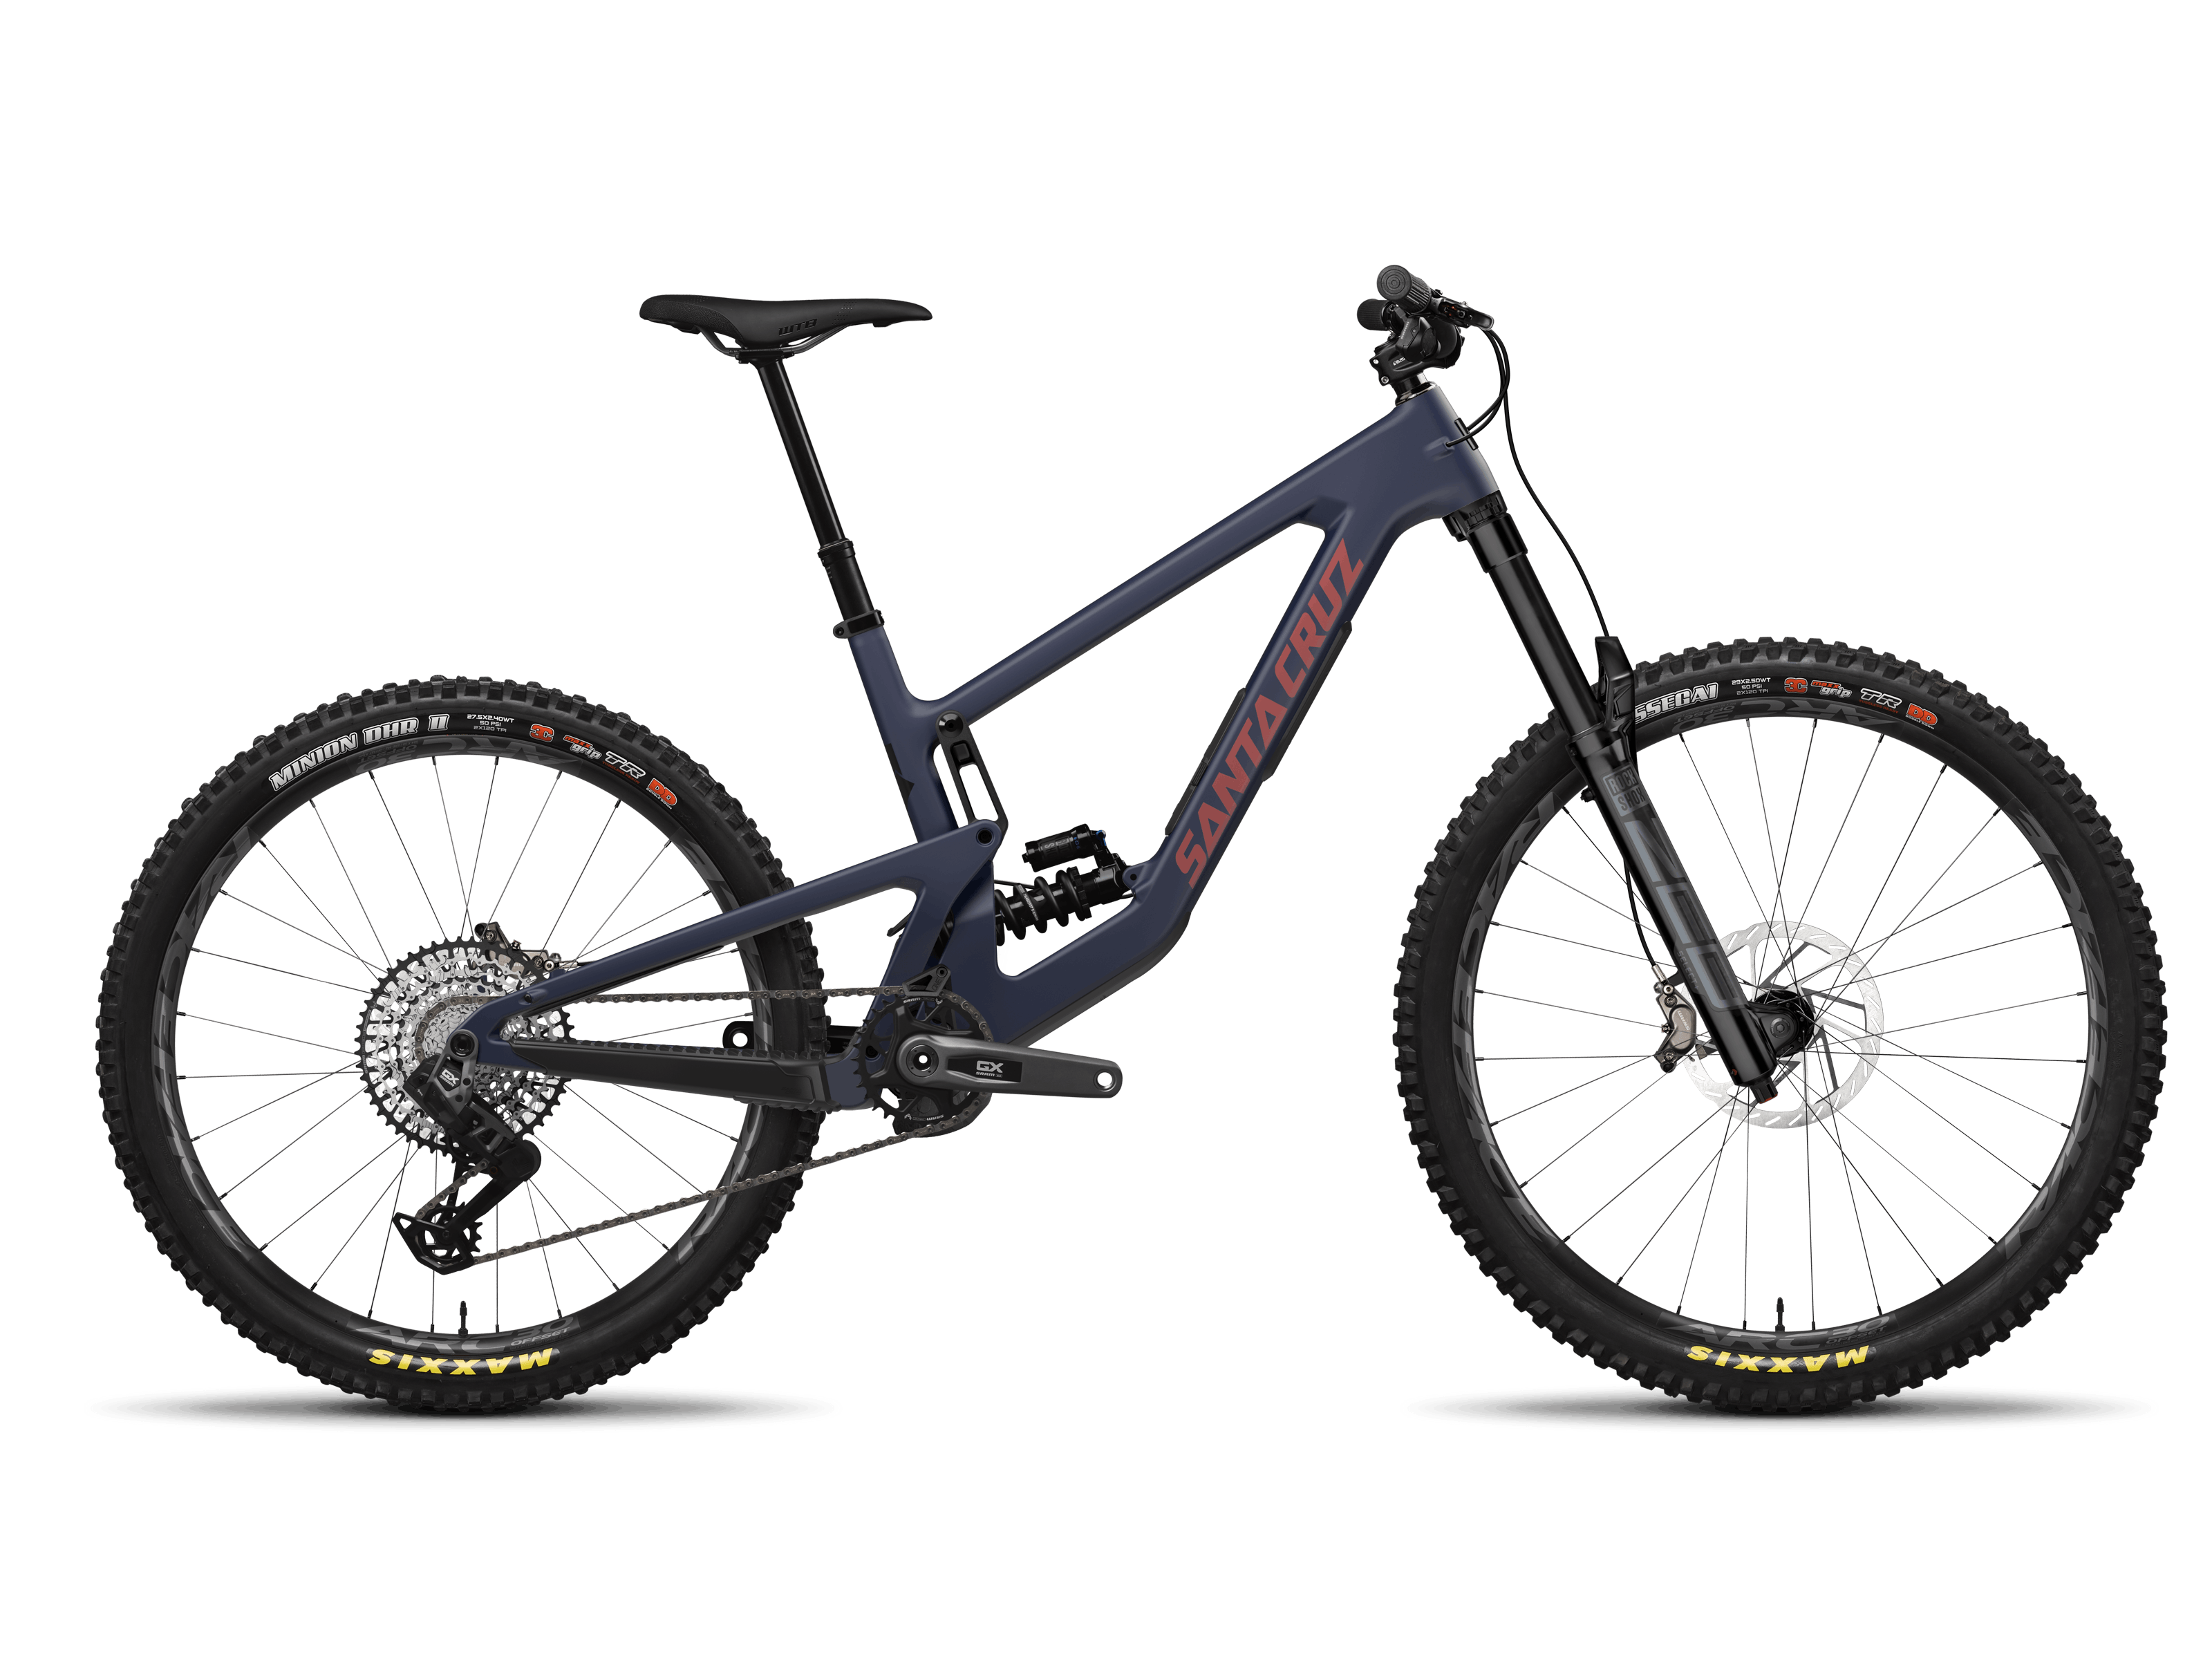 Nomad 6 - Full Suspension Mountain Bike | Santa Cruz Bicycles